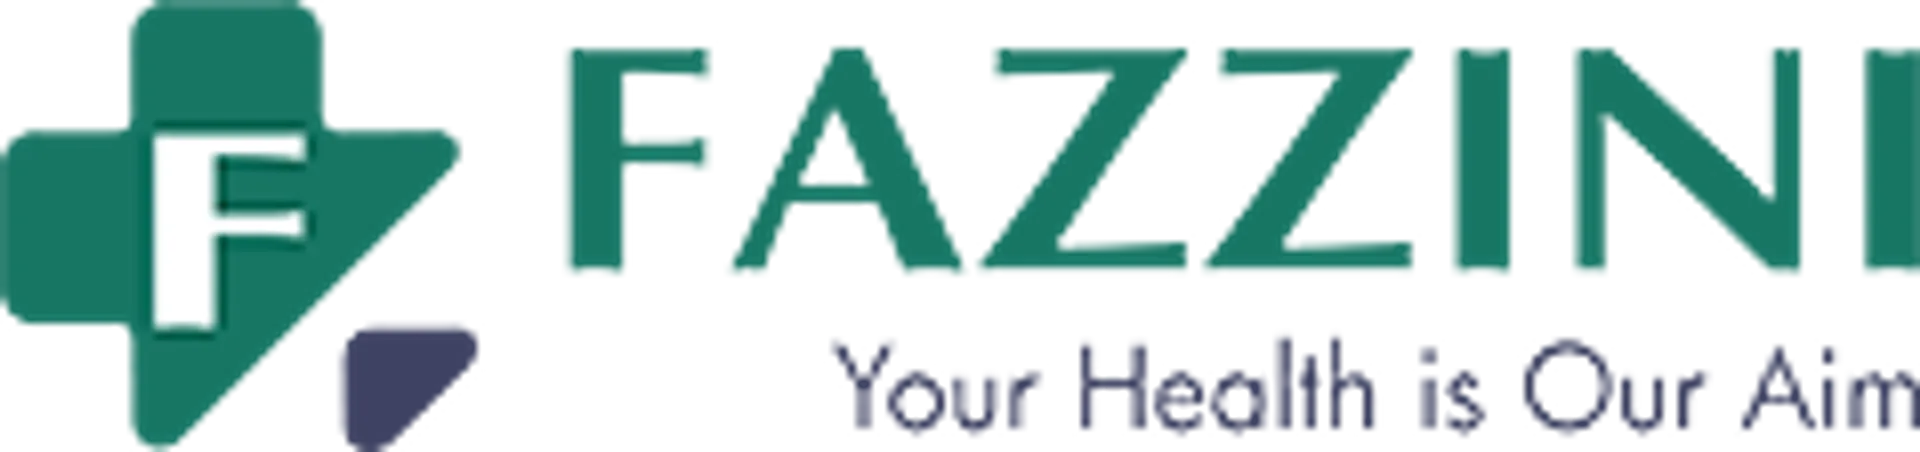 FAZZINI logo